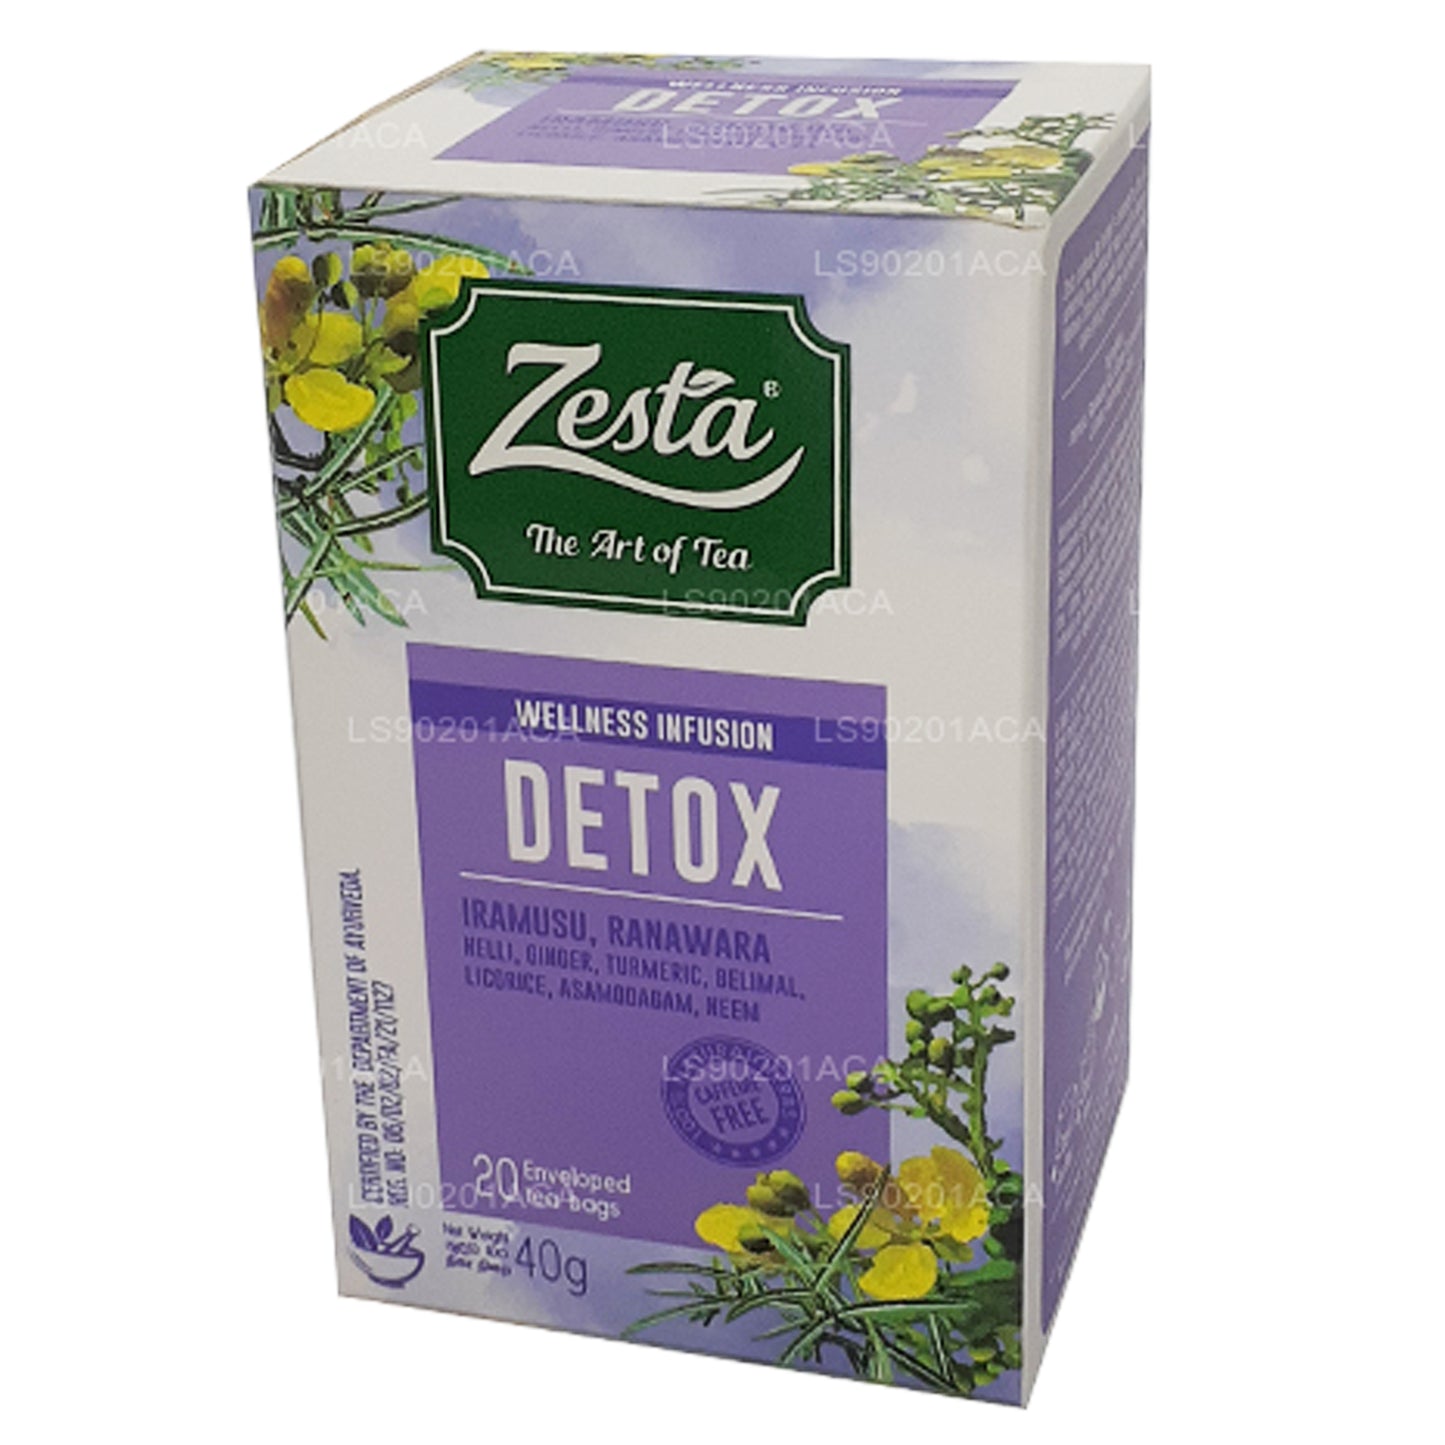 Zesta Detox Iramusu, Ranawara (40g) 20 sachets de thé